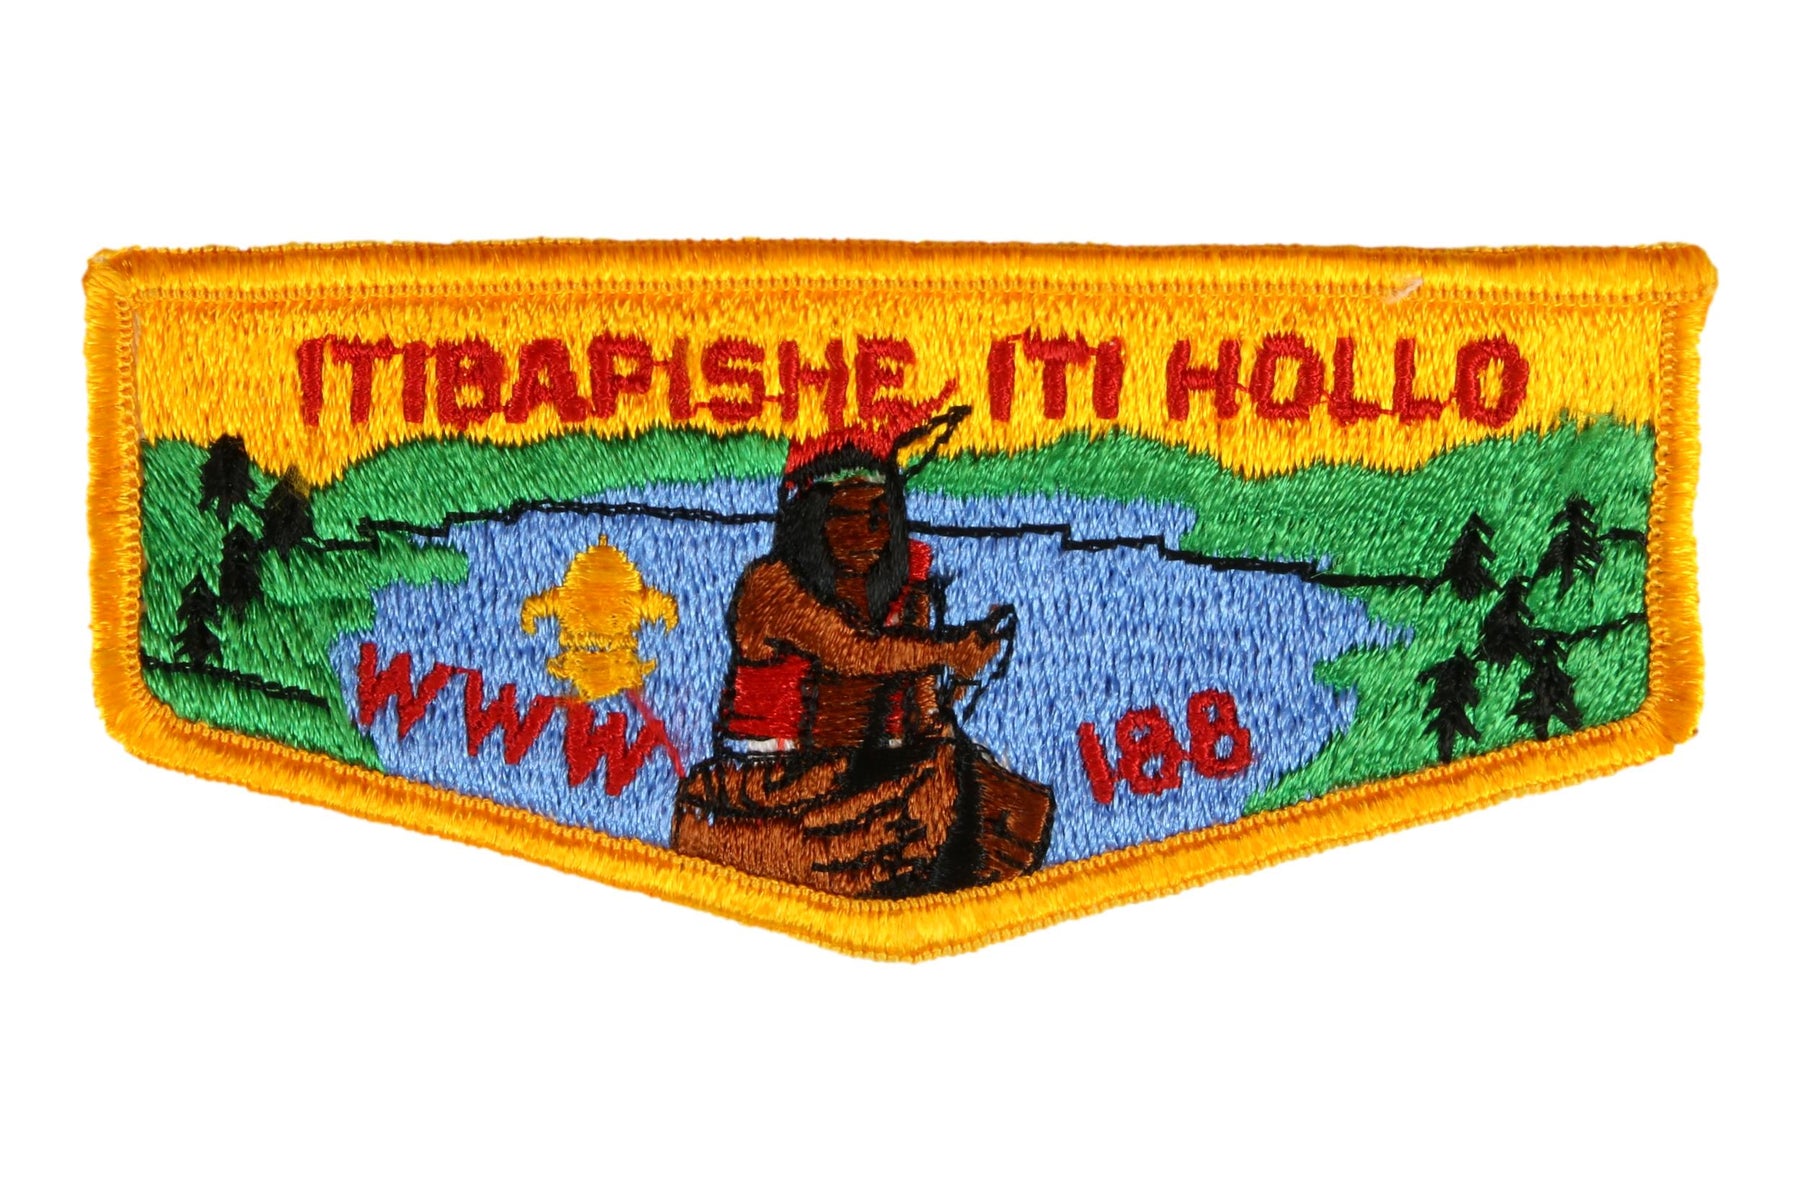 Lodge 188 Itibapishe Iti Hollo Flap S-14a